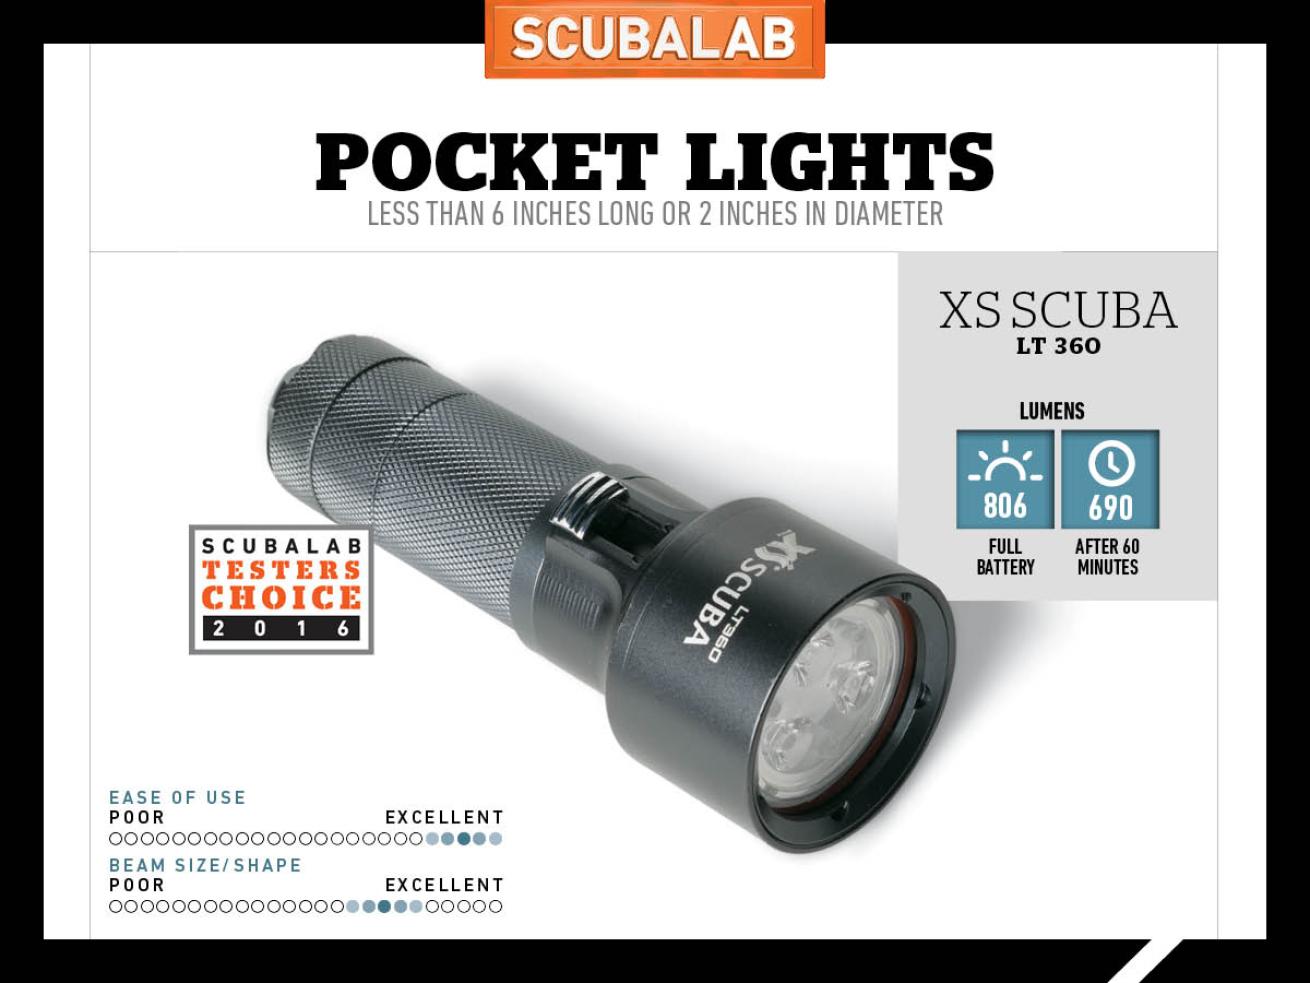 XS Scuba LT 360 Dive Light Reviewed by ScubaLab